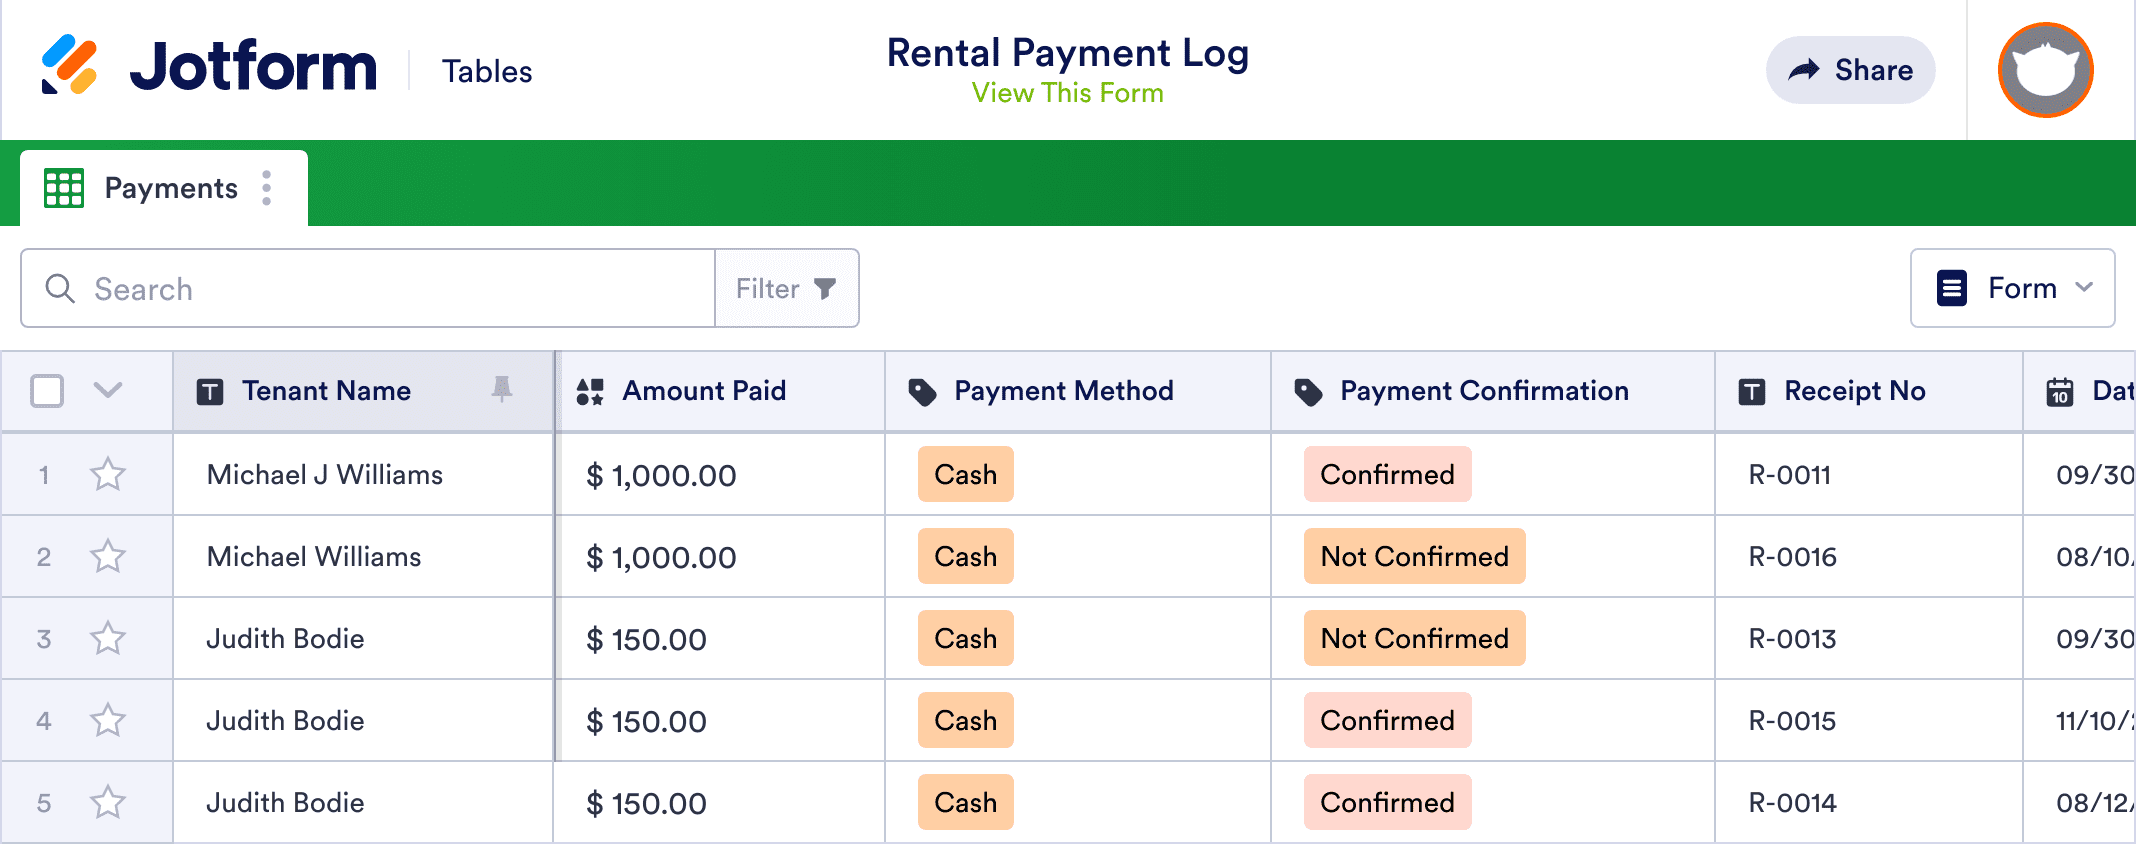 Rental Payment Log Template